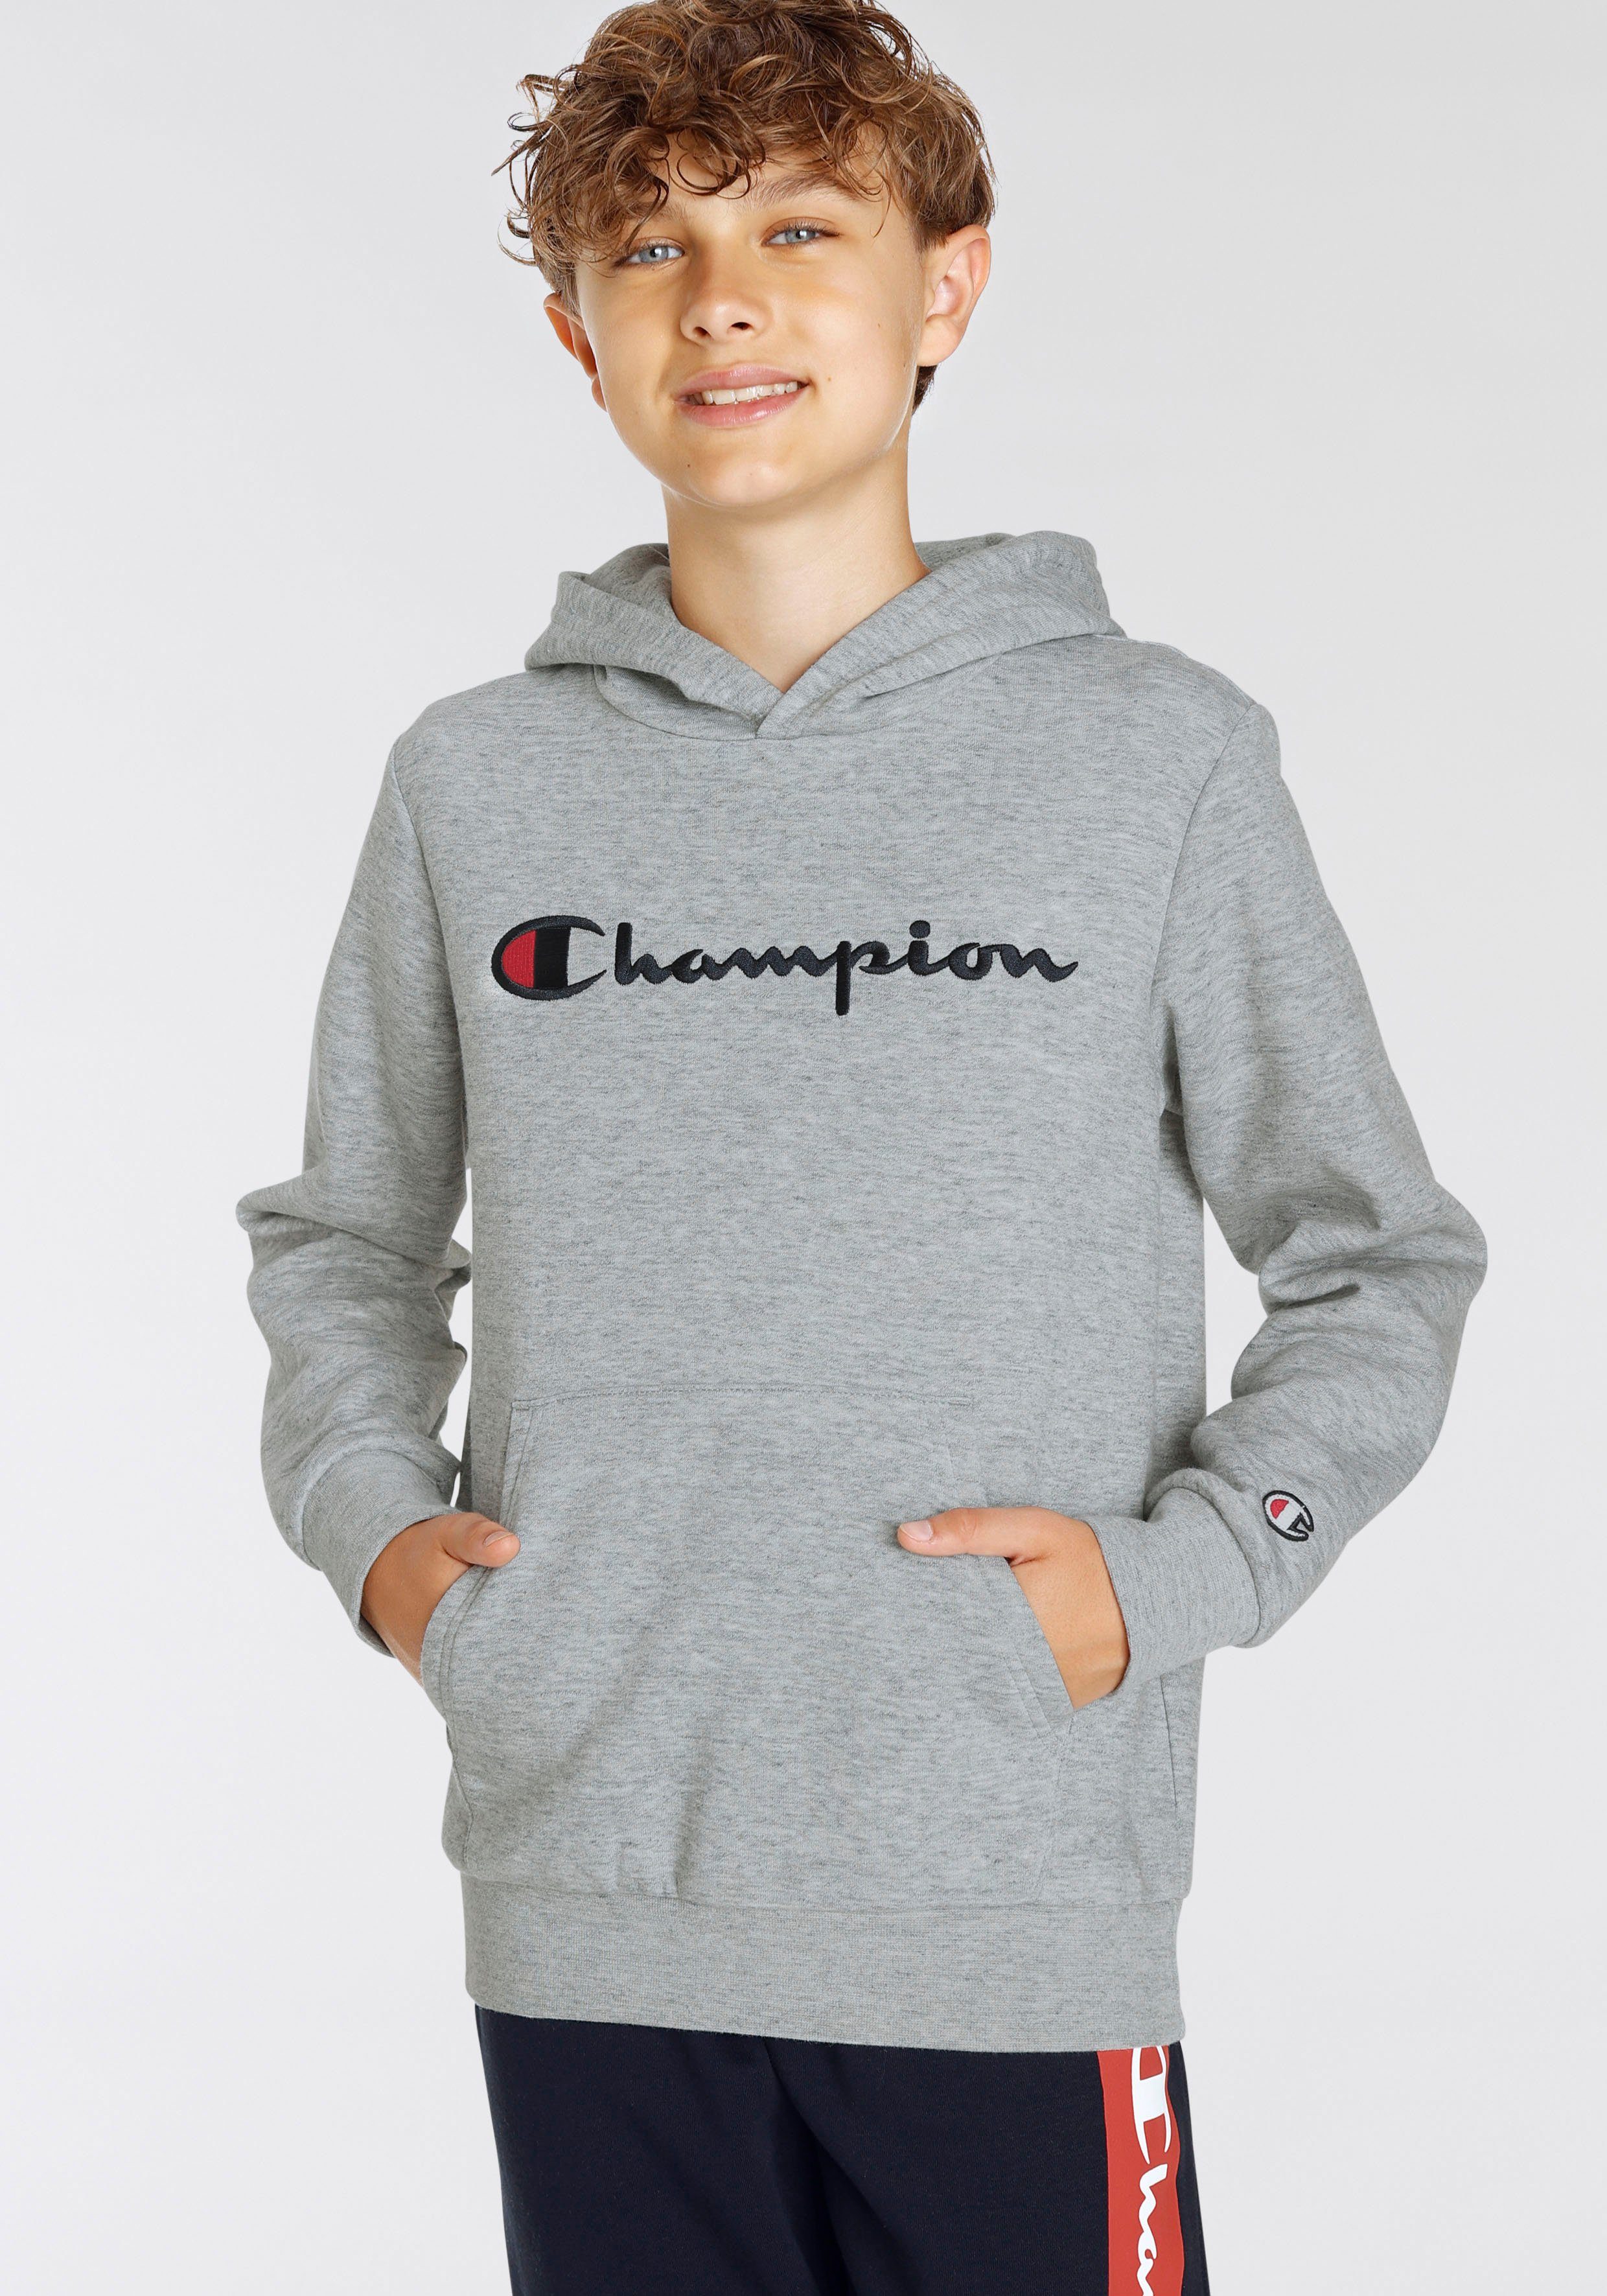 Champion Sweatshirt Classic Hooded Sweatshirt large Logo - für Kinder grau 2 | Sweatshirts